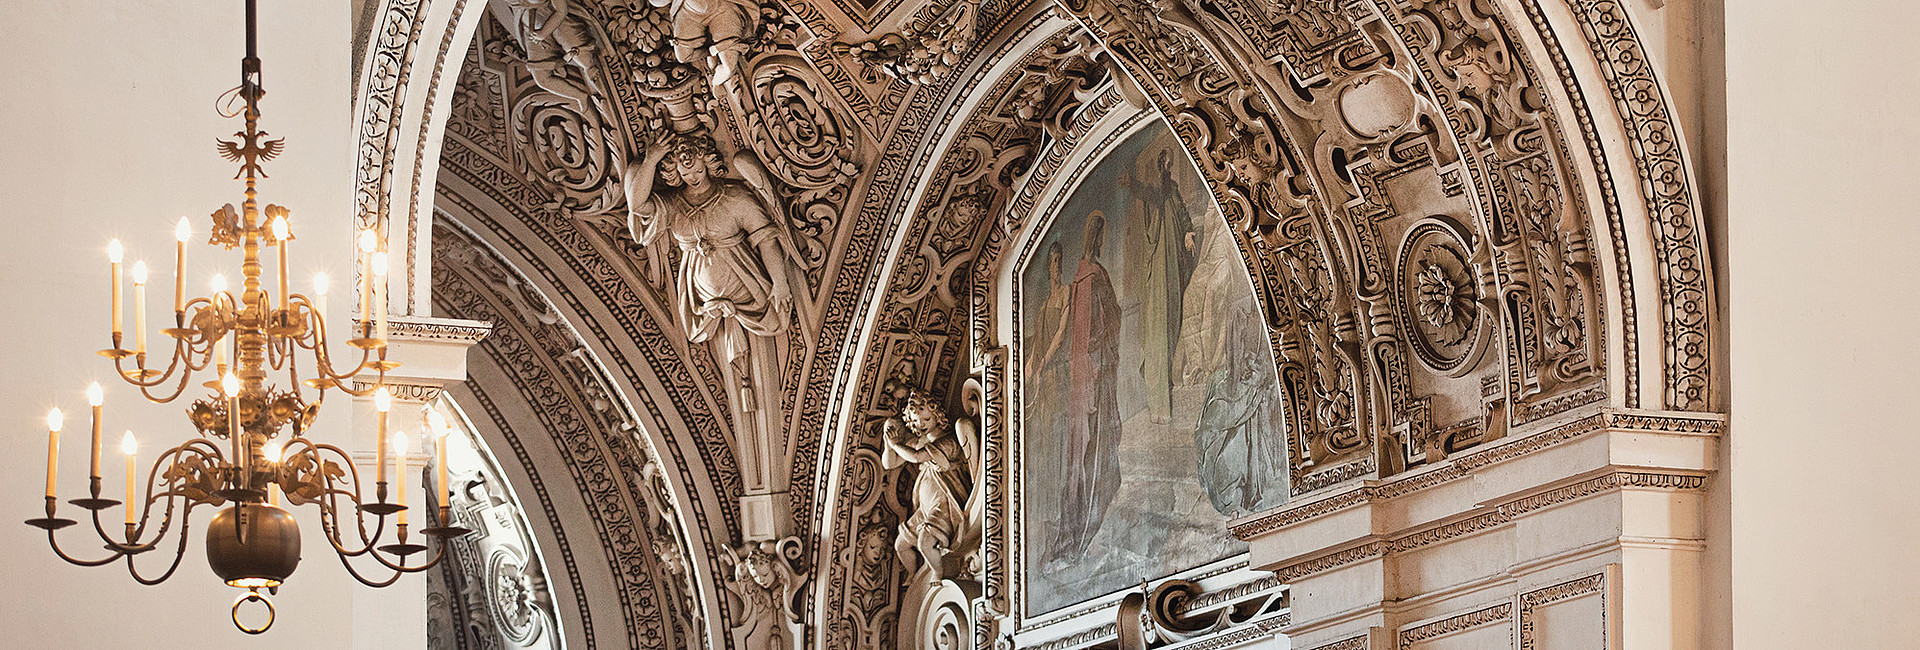 Innenraum Kirche Bogen Seitenkapelle, Stuck Verzierungen Gewölbe Bilder Hängeleuchter